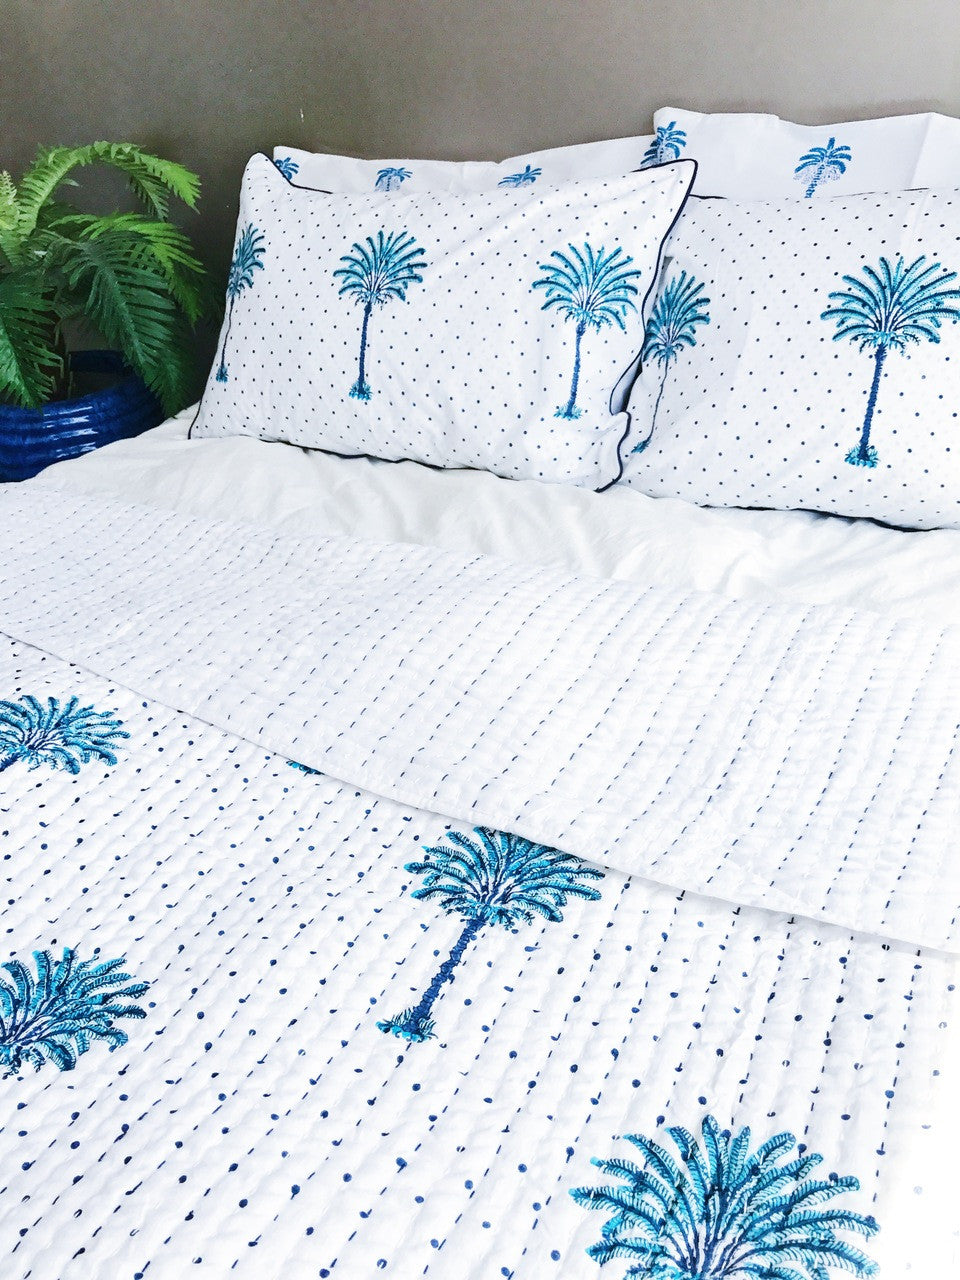 Boho Blue Polka Dot Palm Trees Pillow Case| Peacocks and Paisleys